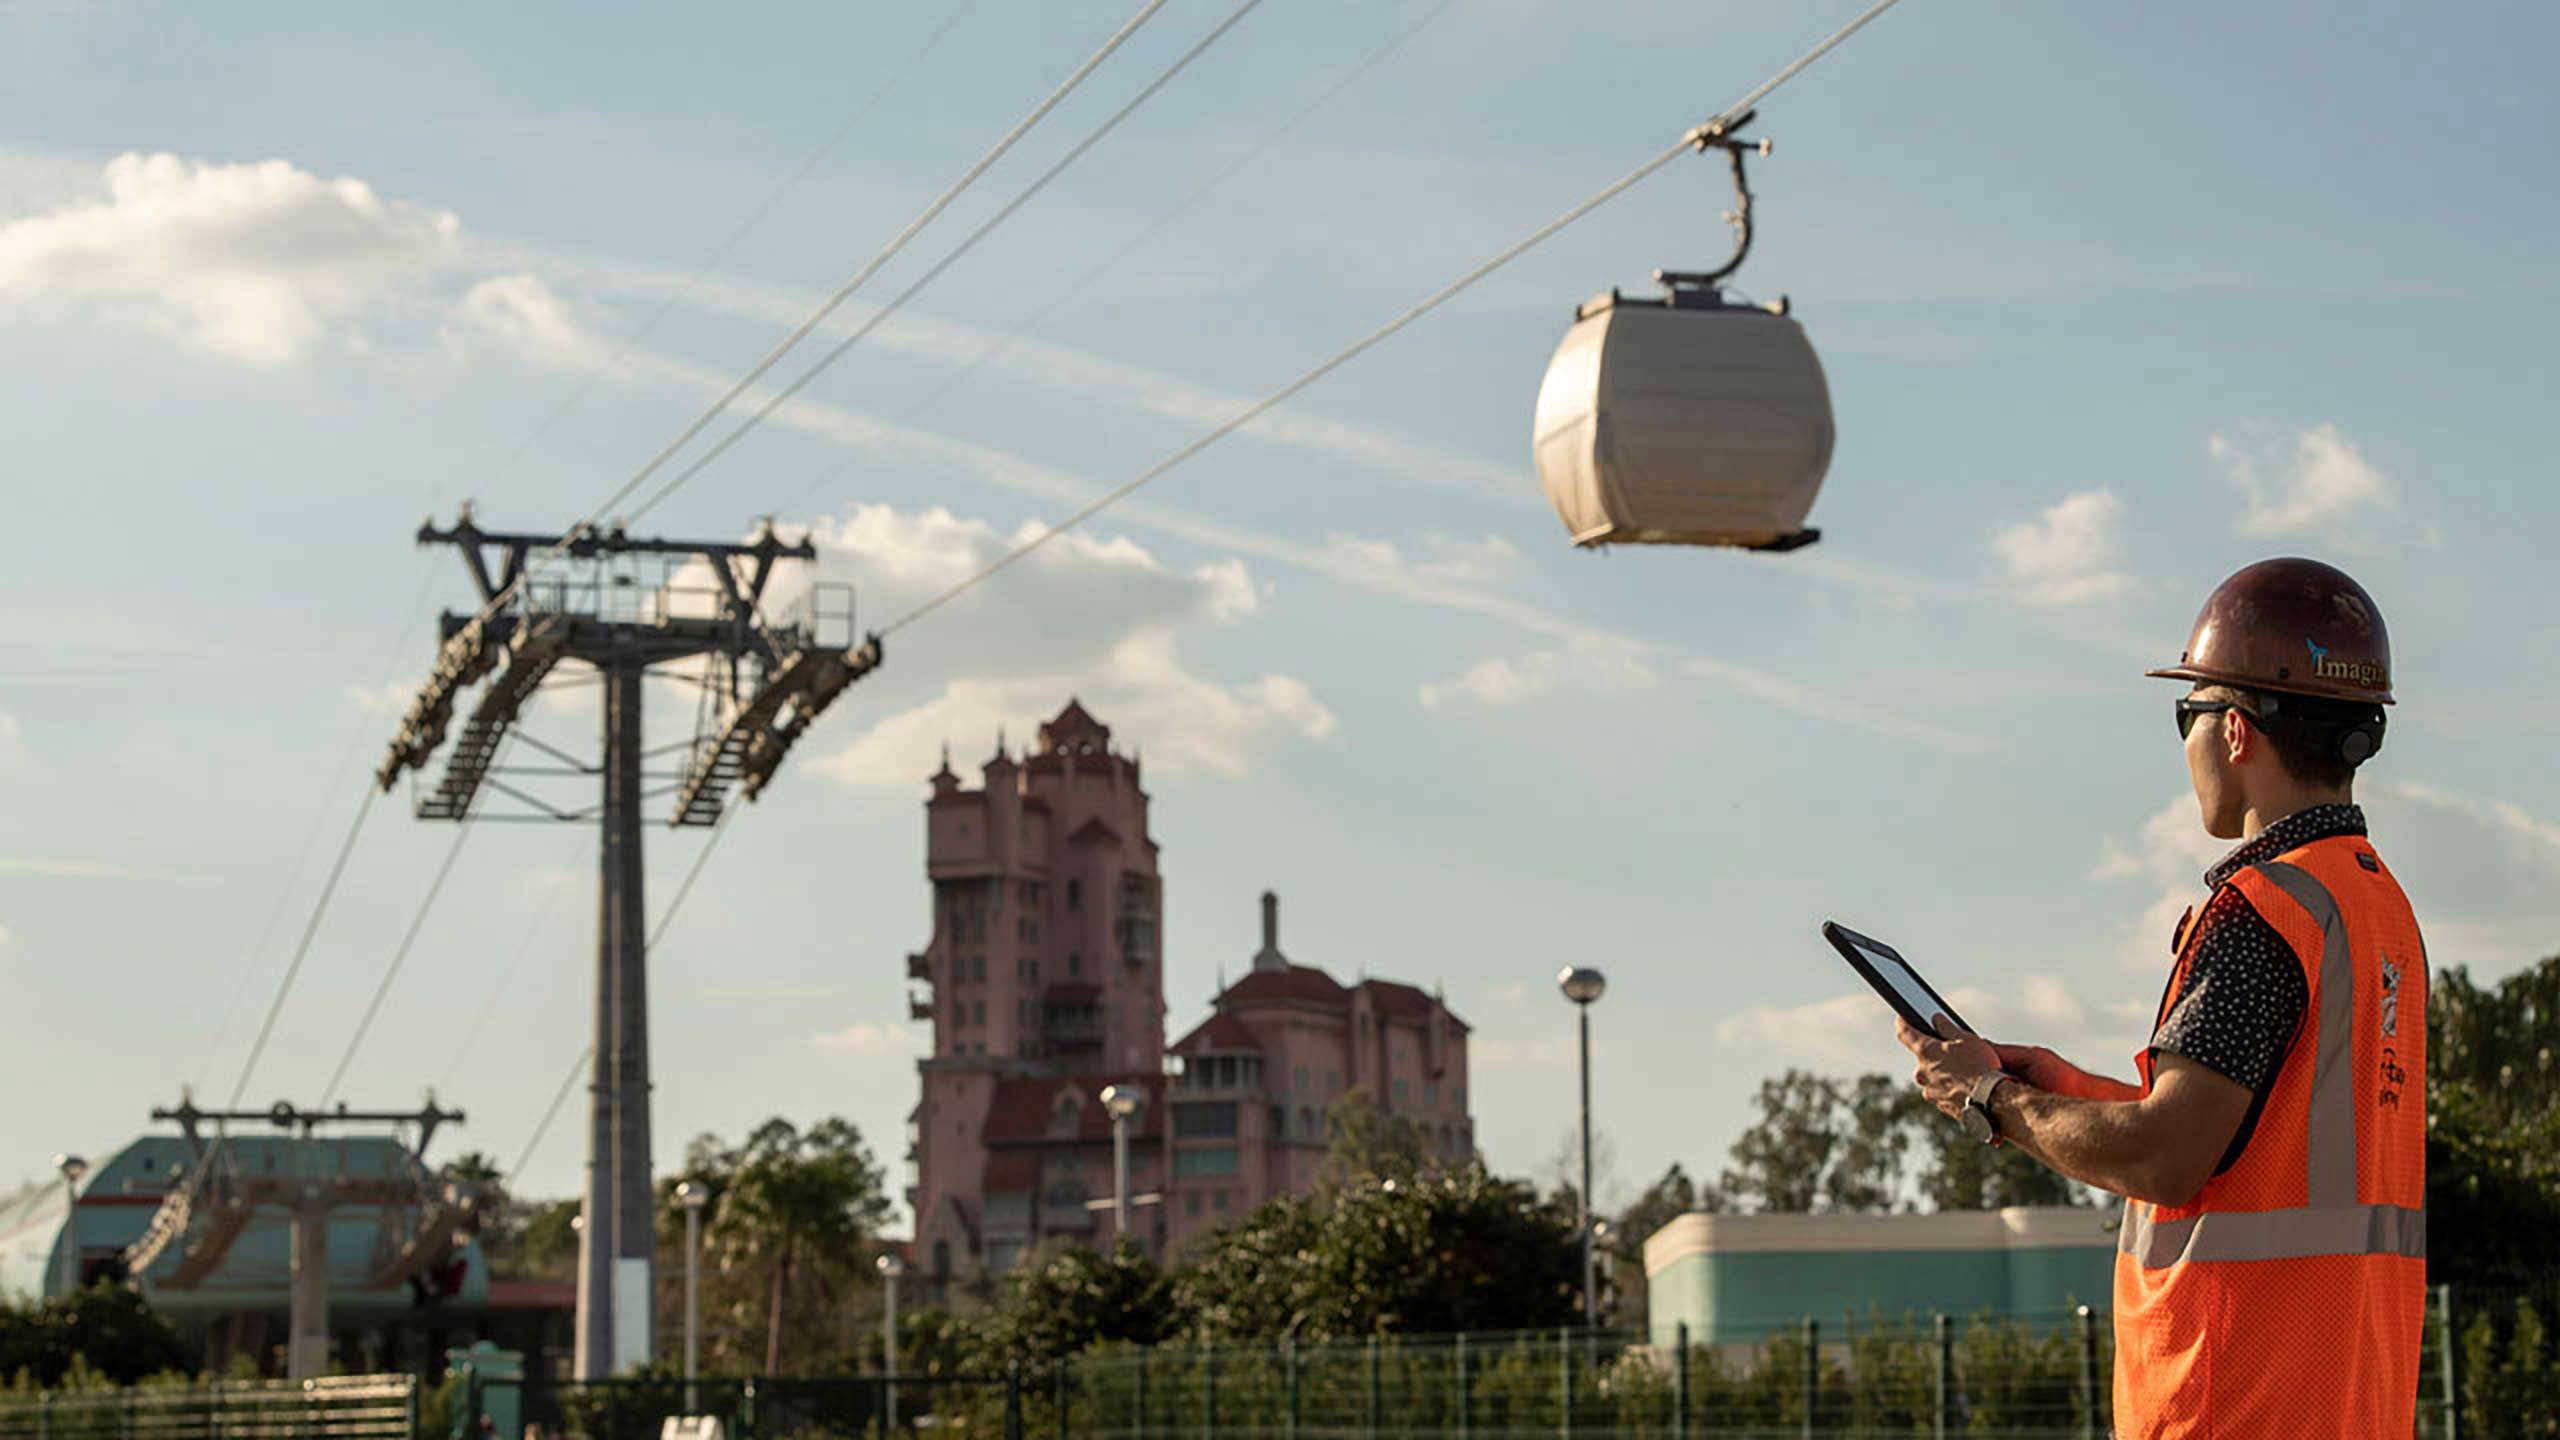 Disney Skyliner guest gondola testing